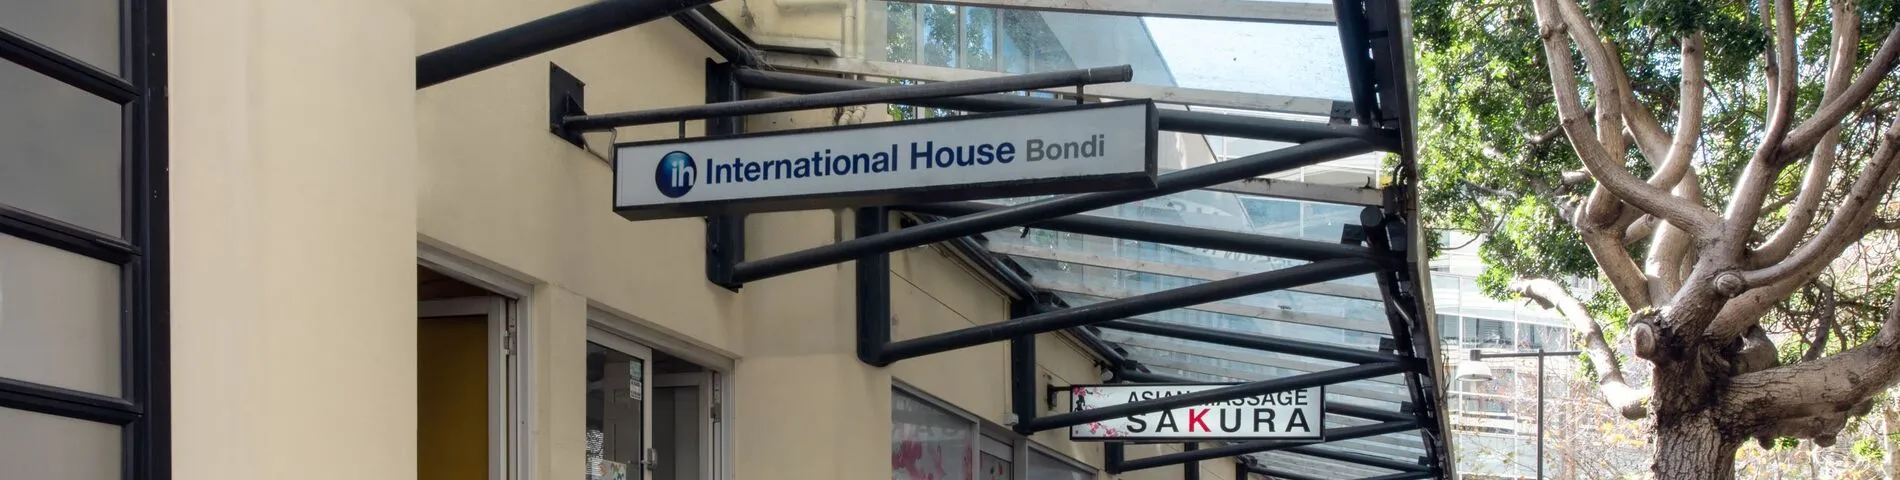 International House kép 1